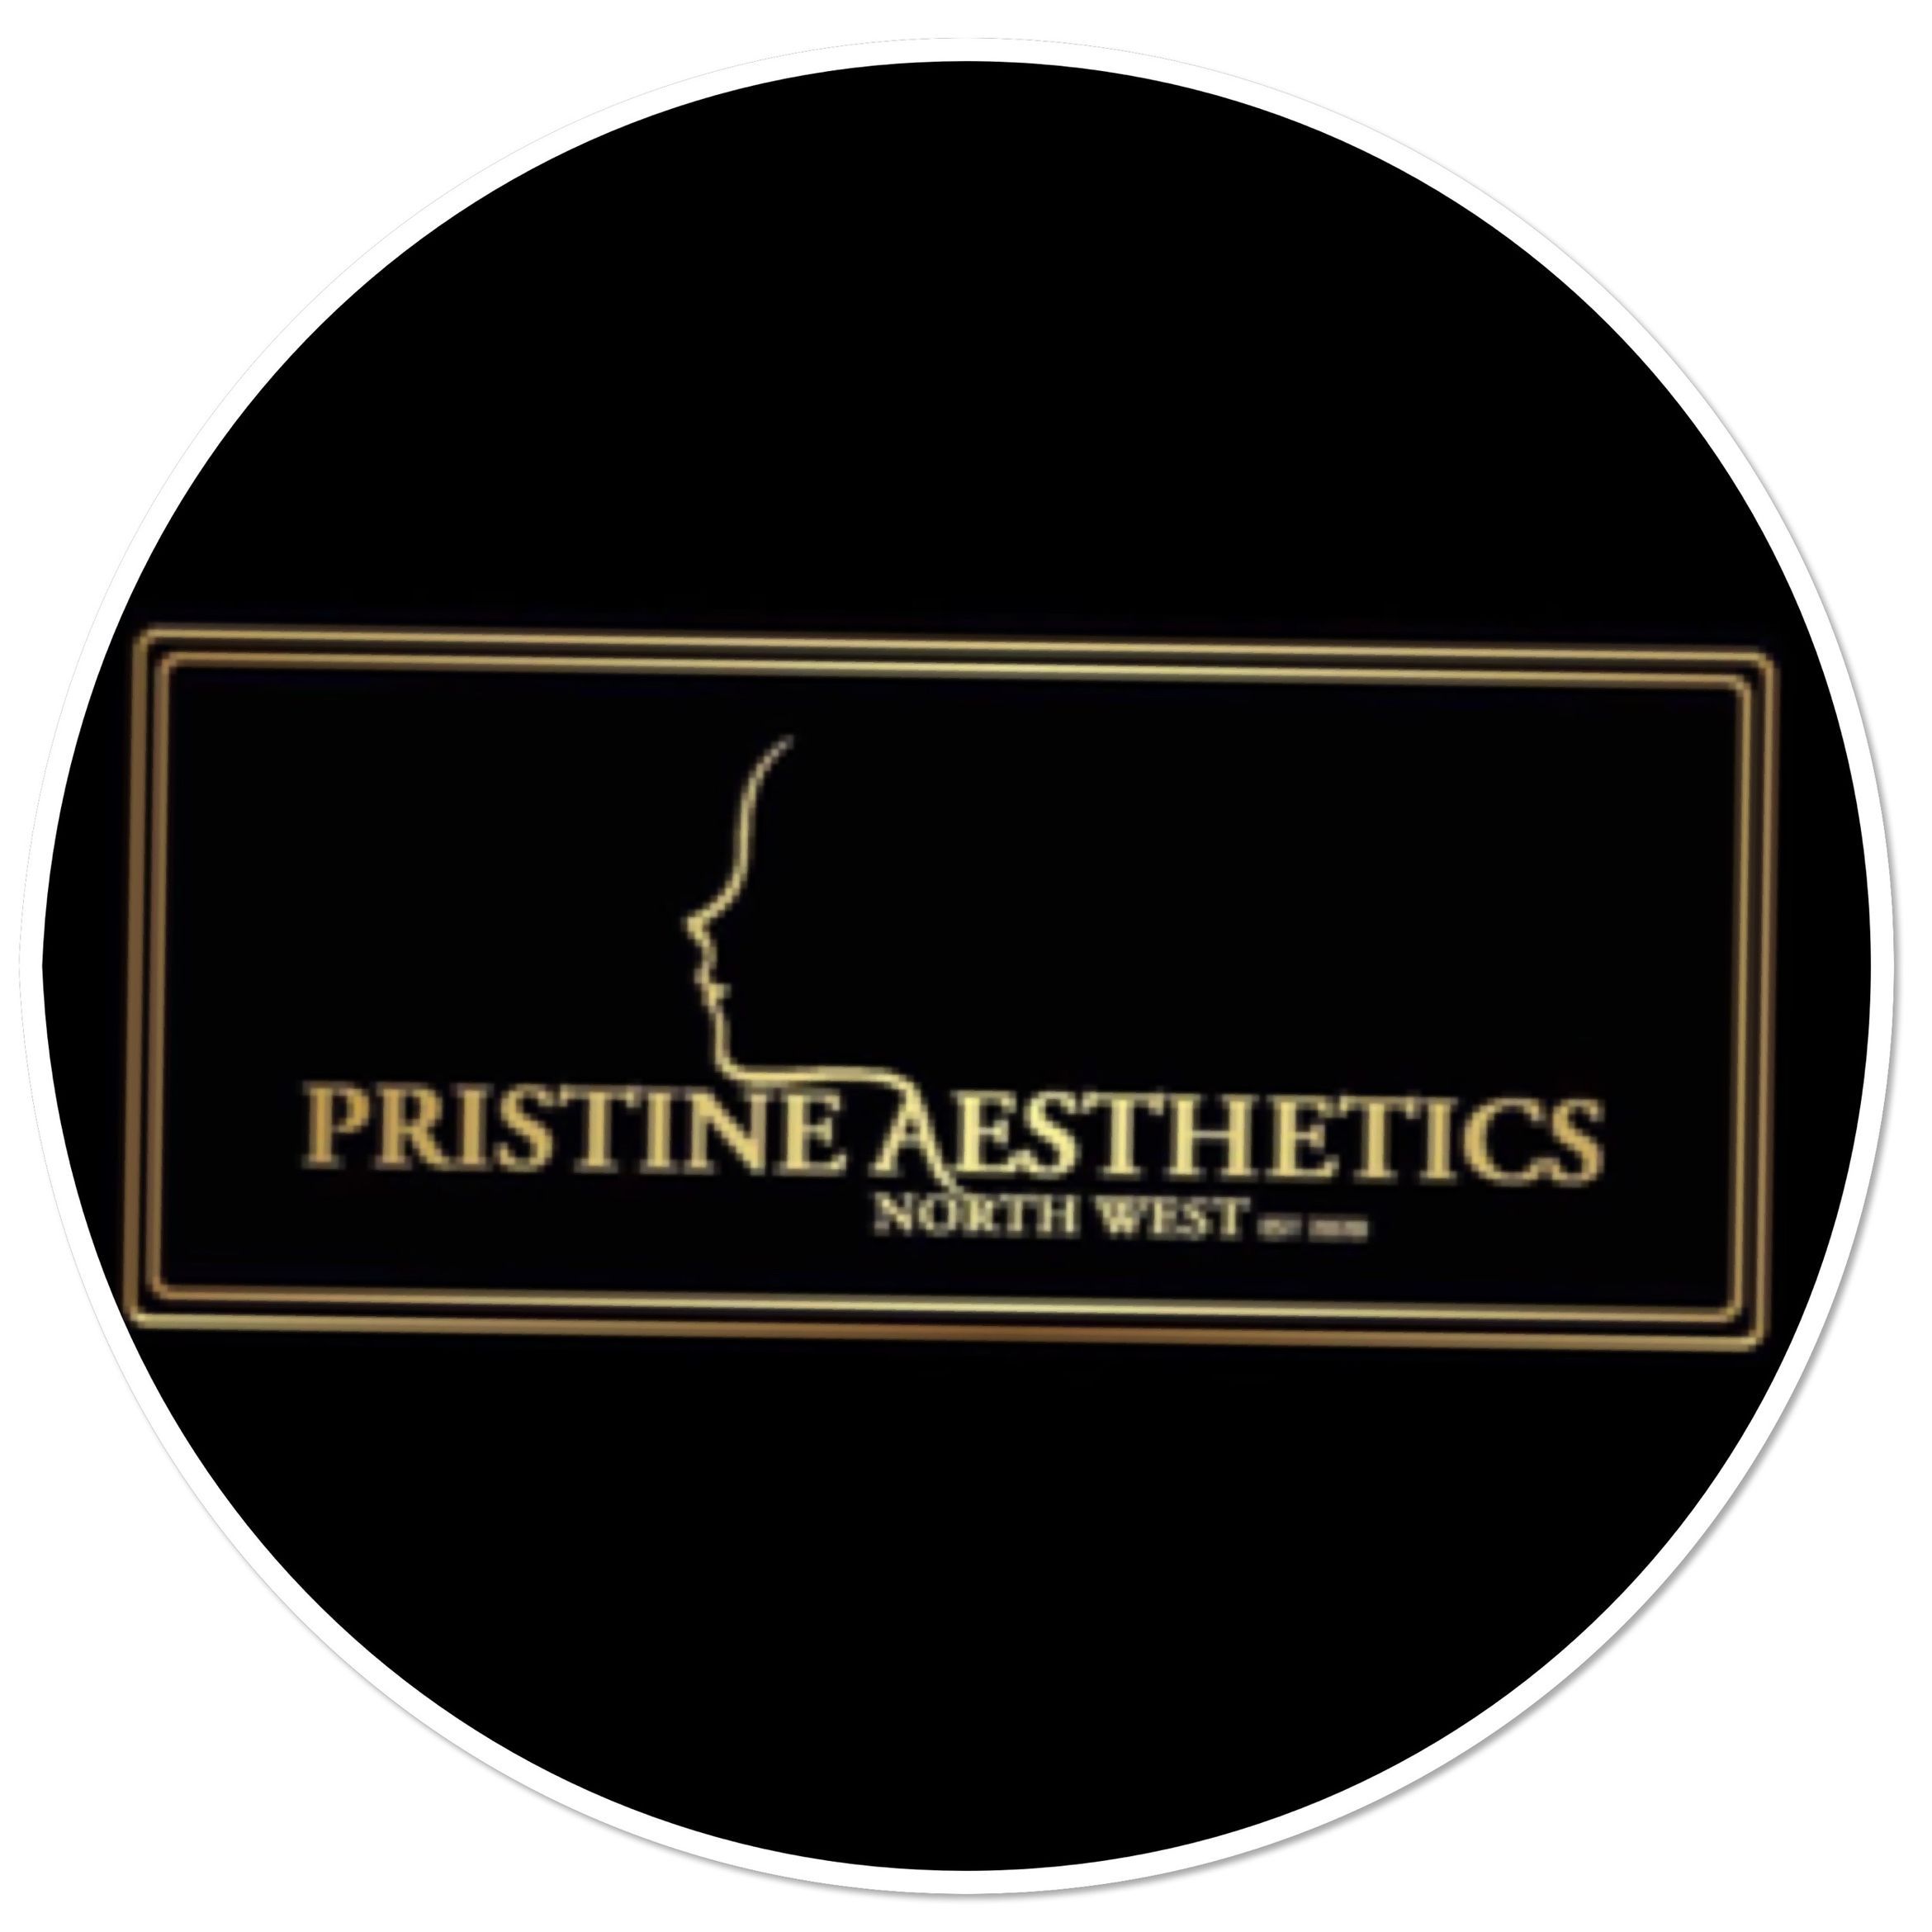 Pristine Aesthetics North West, WN4 9LT, Wigan